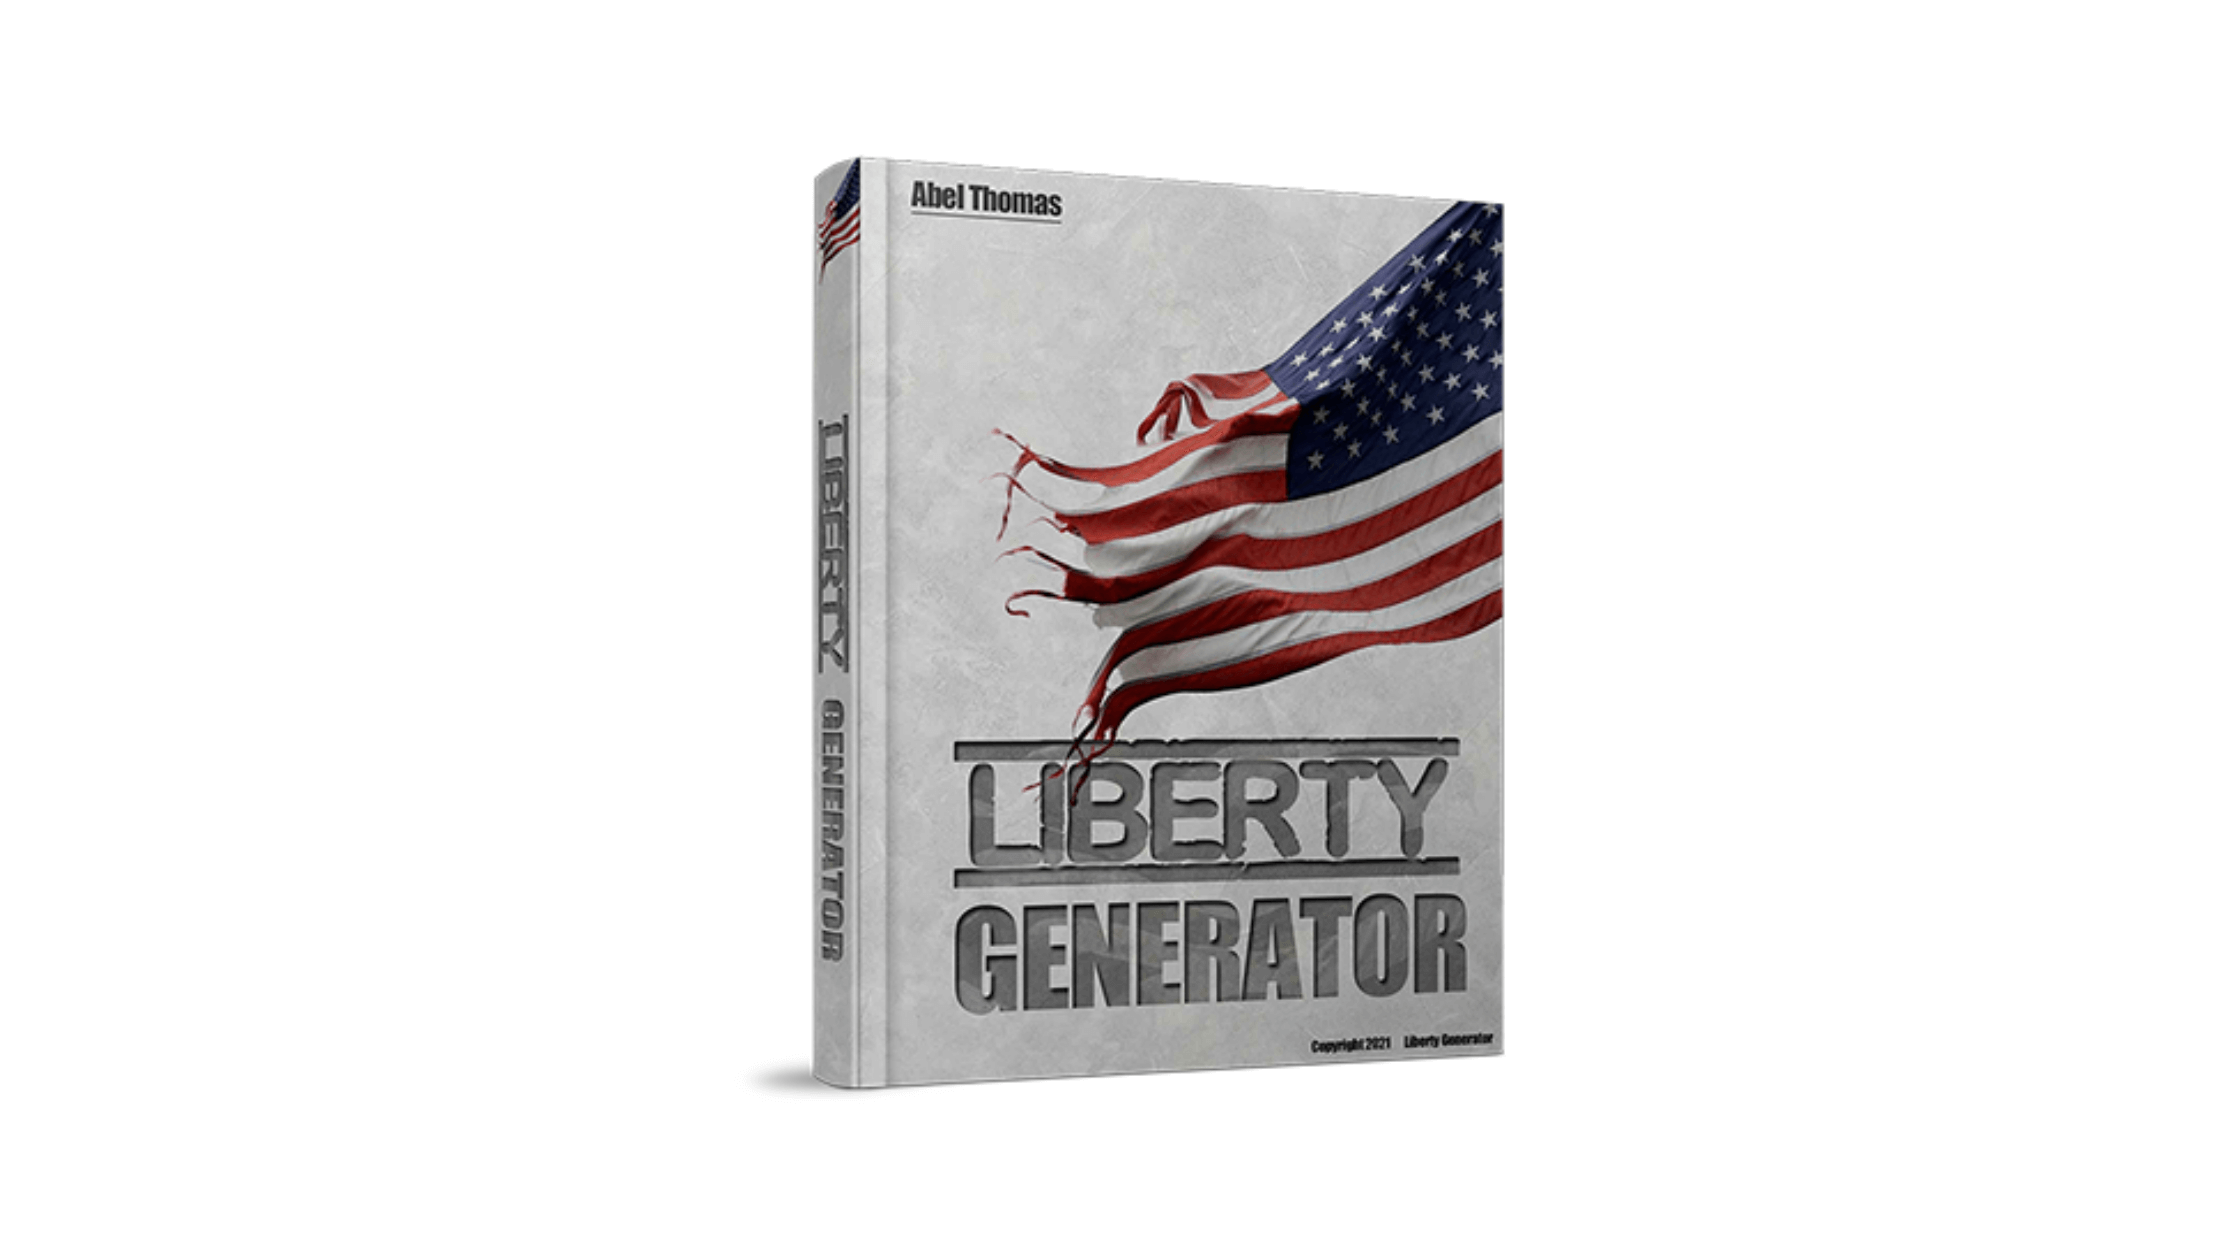 Liberty Generator Reviews - An Effective Biogas Generator By Abel Thomas